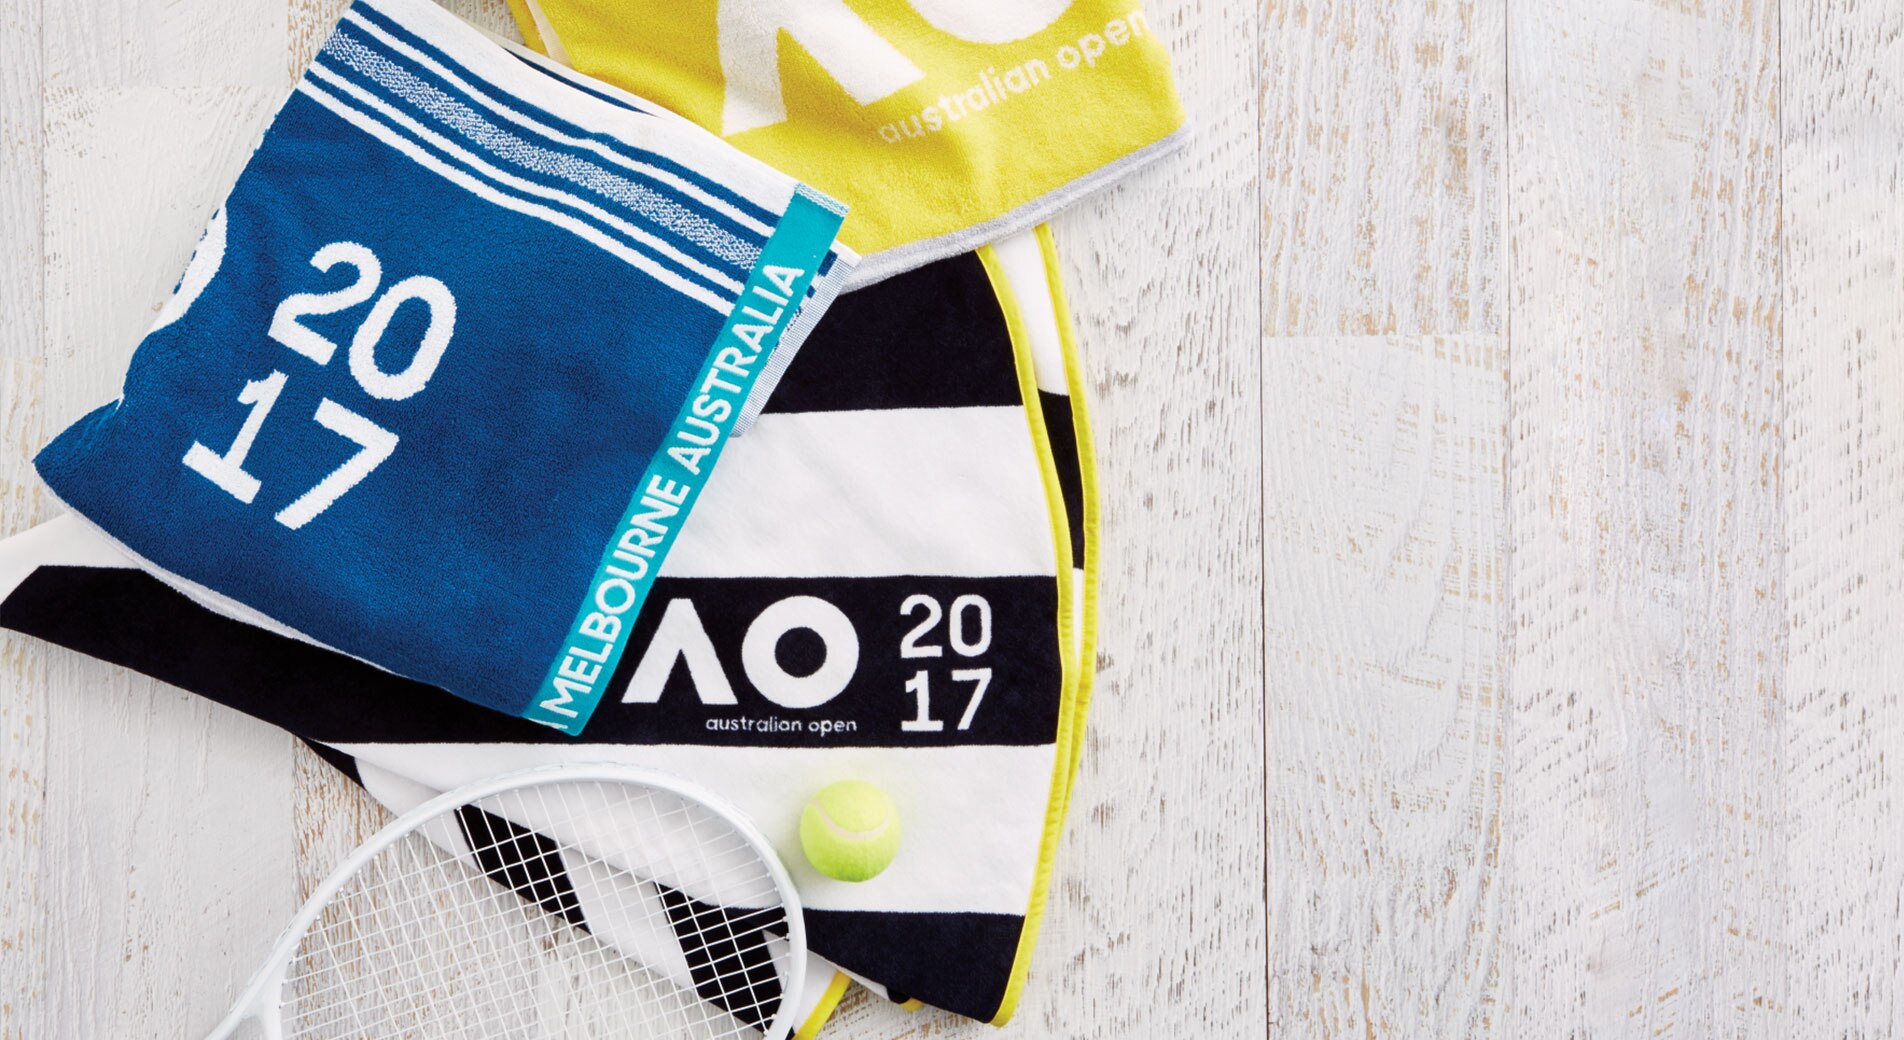 Australian Open Tennis 2015 Women's Sheridan Gym Towel 59x90cmLimited Edition 